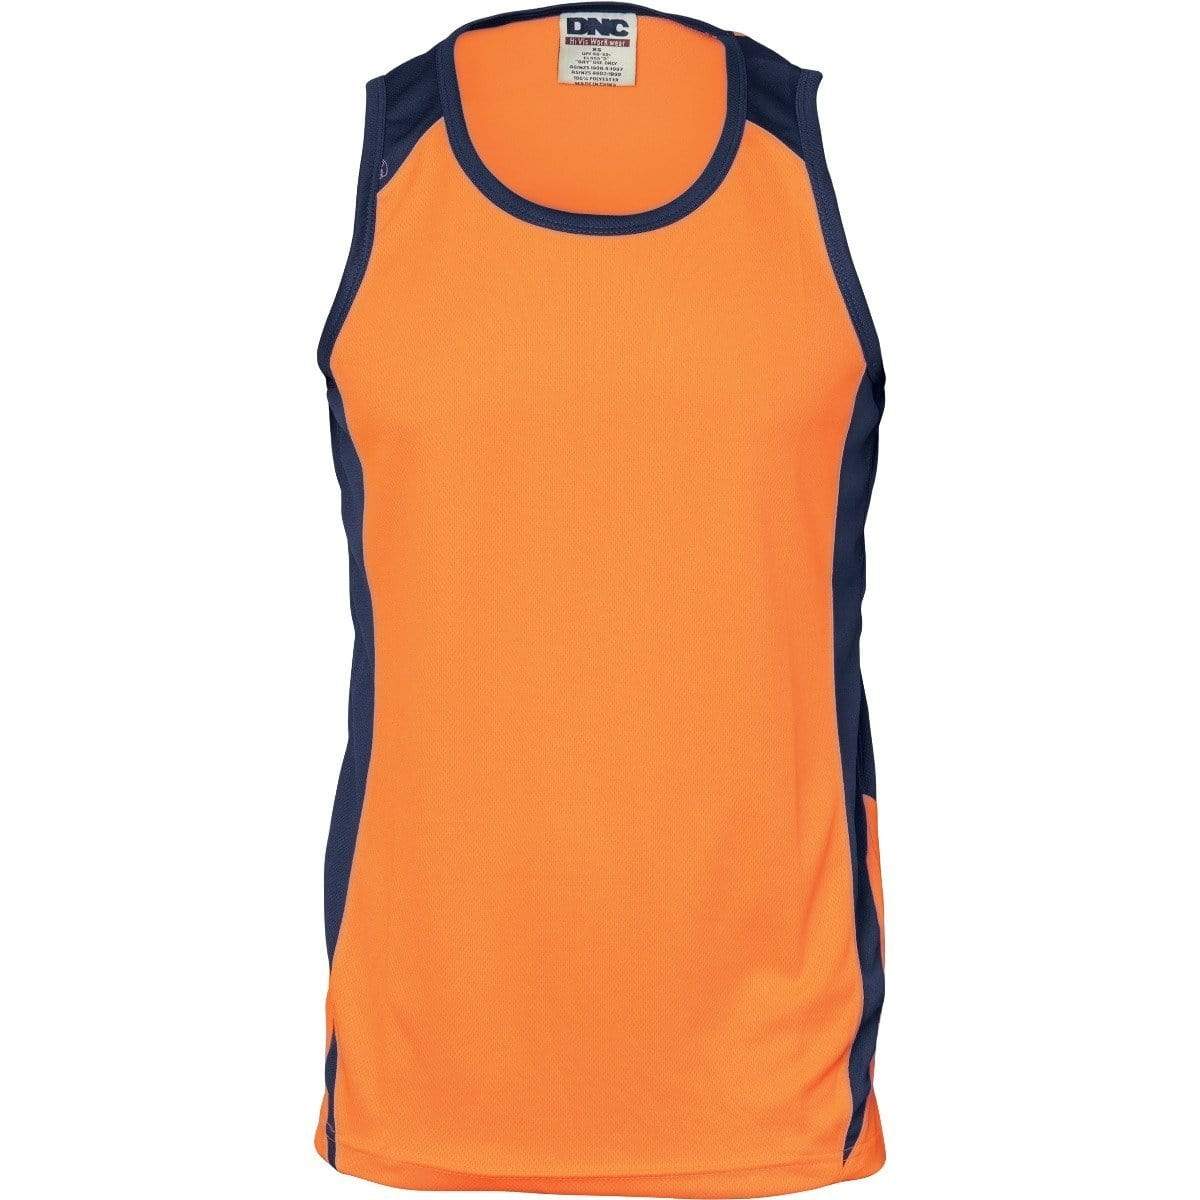 Dnc Workwear Cool Breathe Action Singlet - 3842 Work Wear DNC Workwear Orange/Navy XS 